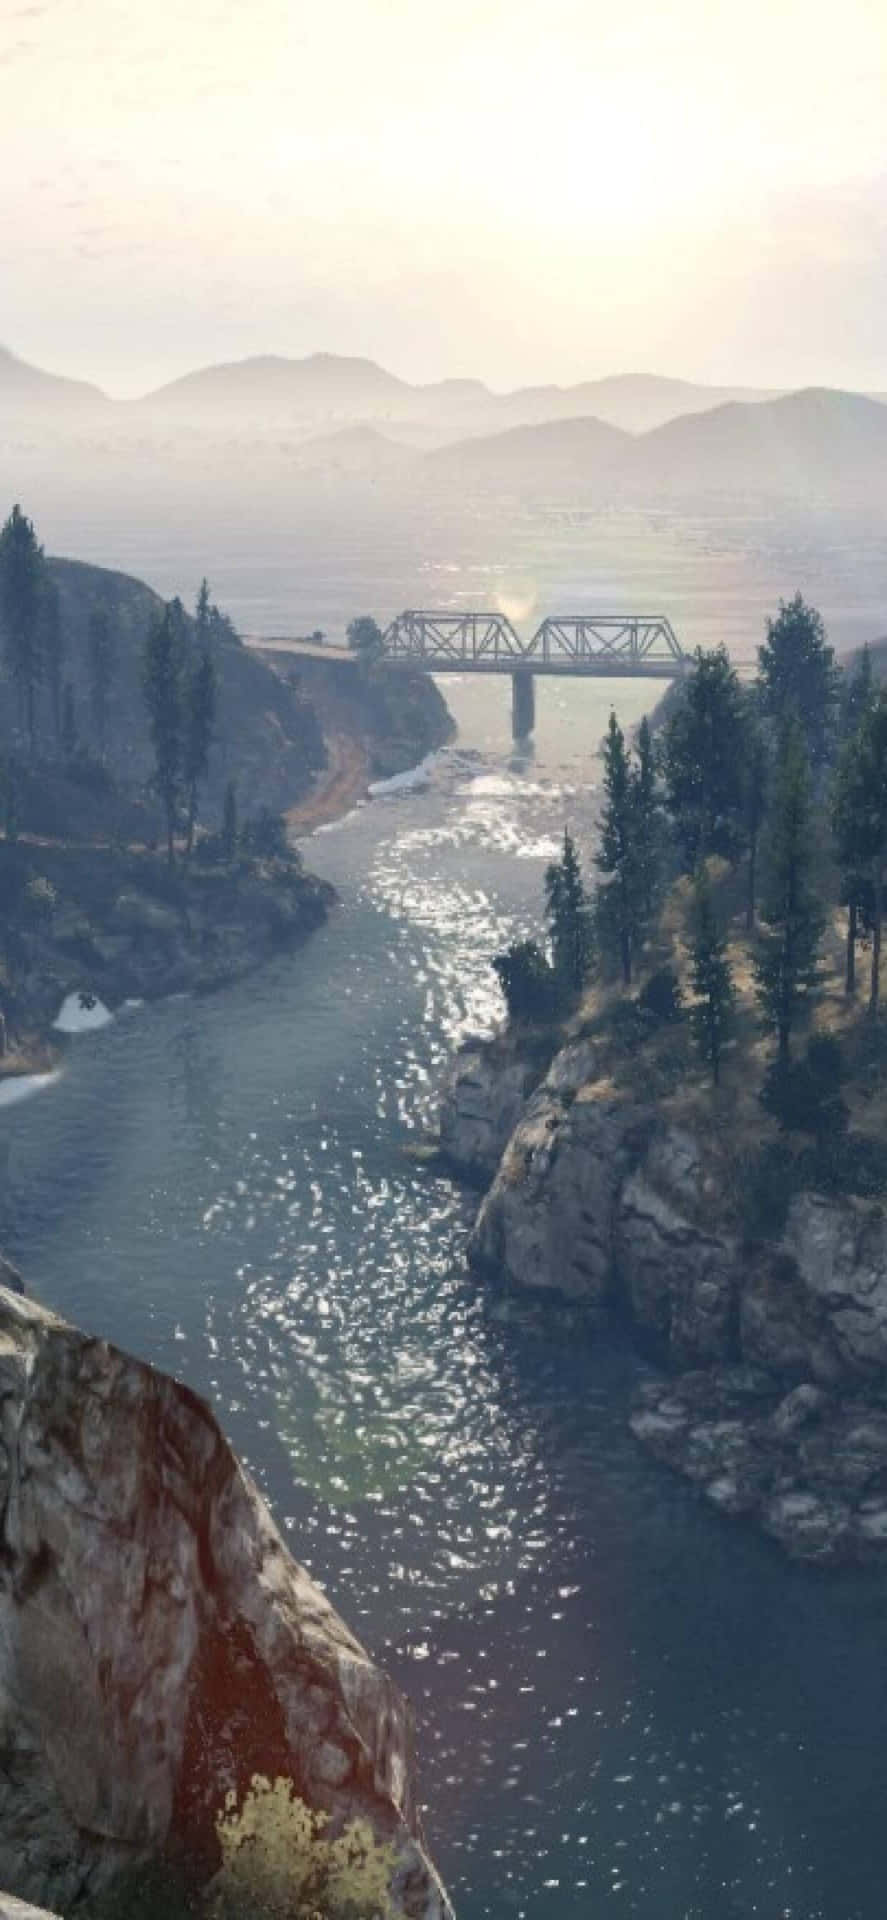 Iphonexs Max Bakgrundsbild Från Grand Theft Auto V, Los Santos River.